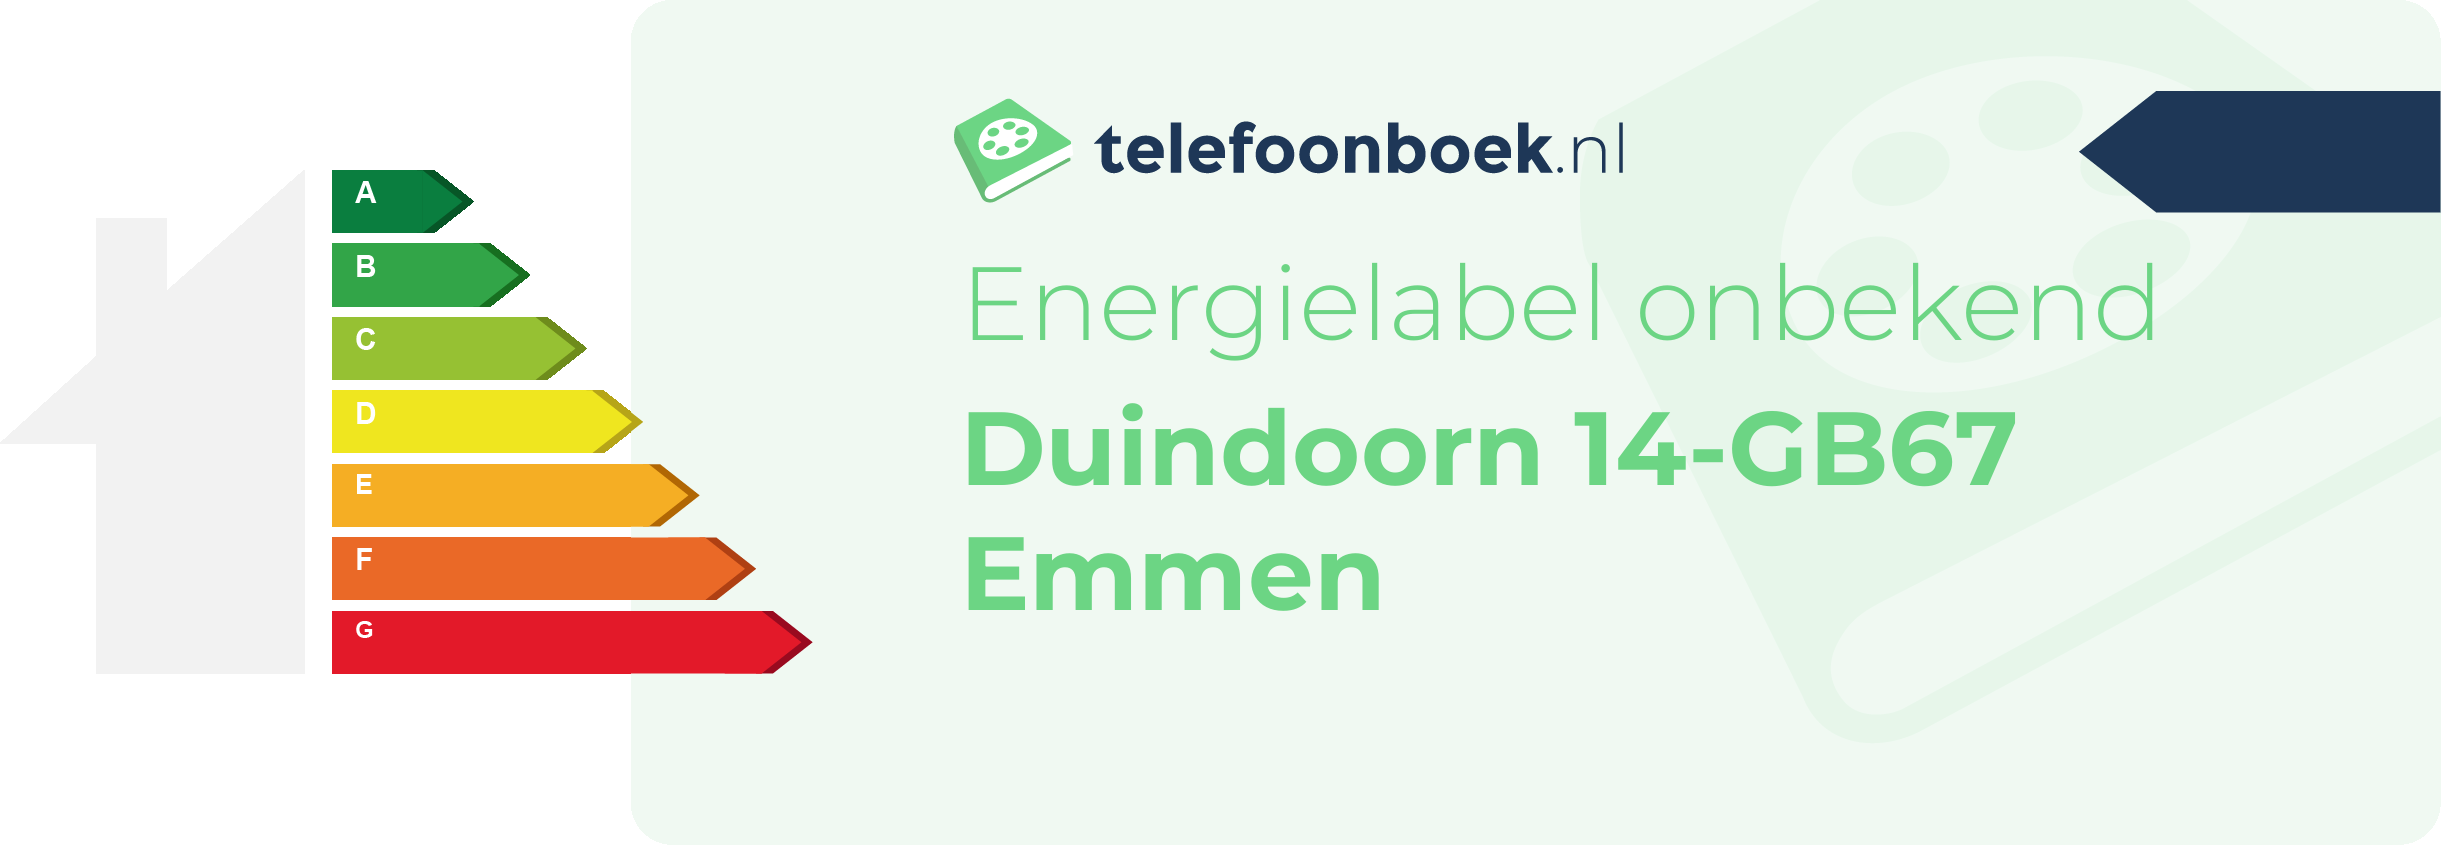 Energielabel Duindoorn 14-GB67 Emmen